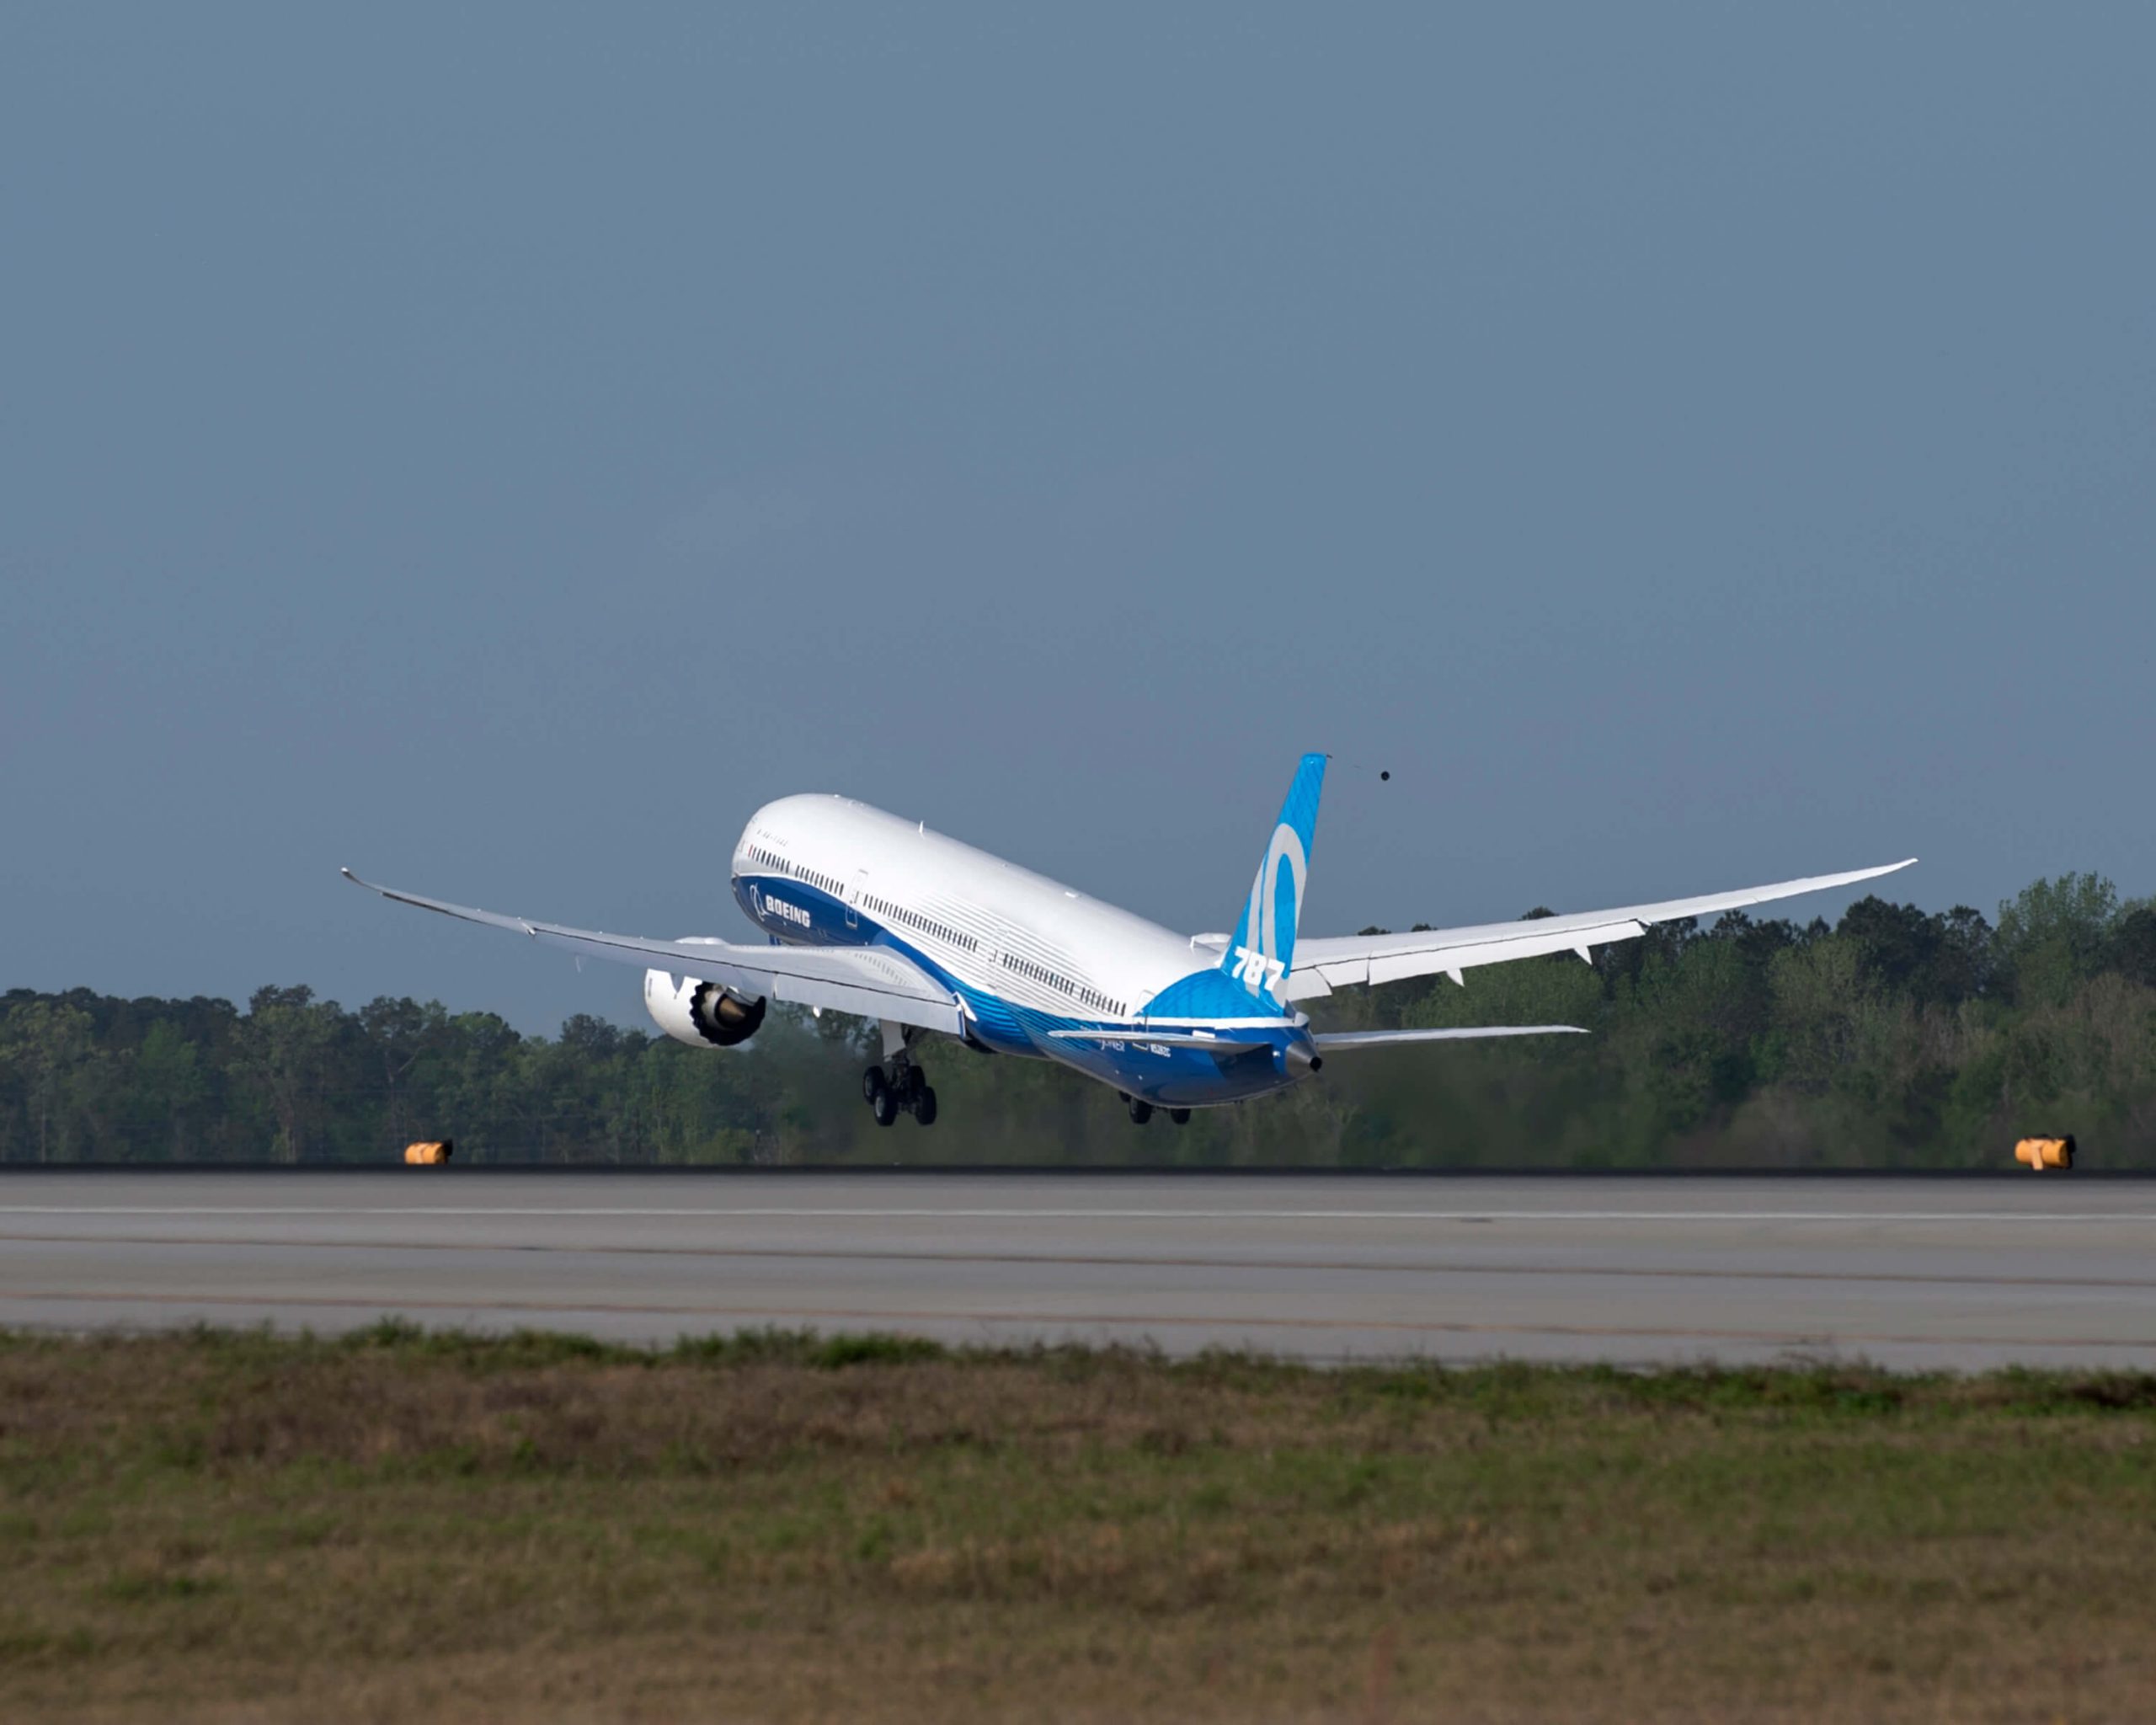 Lufthansa Technik will extend its Base Maintenance capabilities by adding Boeing 787 Dreamliner